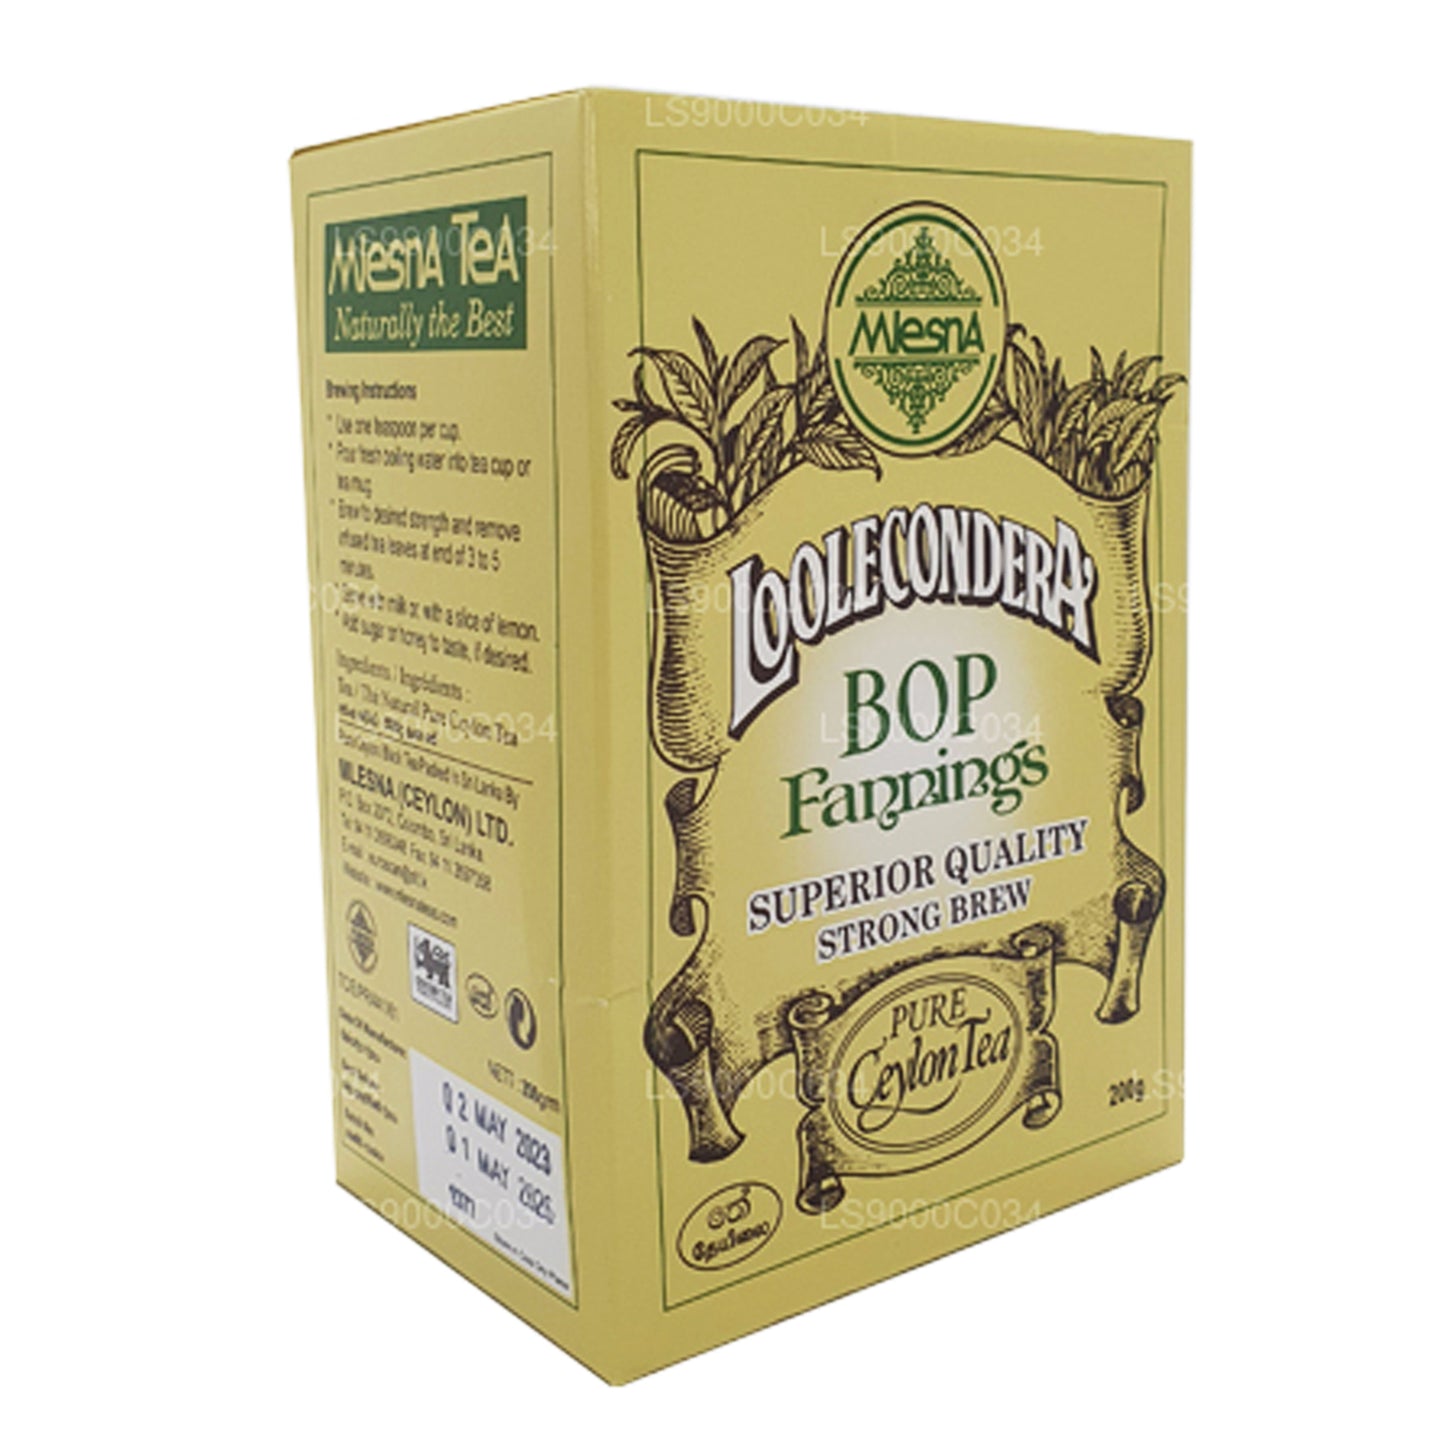 Mlesna Loolecondera BOP Fannings Strong Brew sypký čaj (200g)